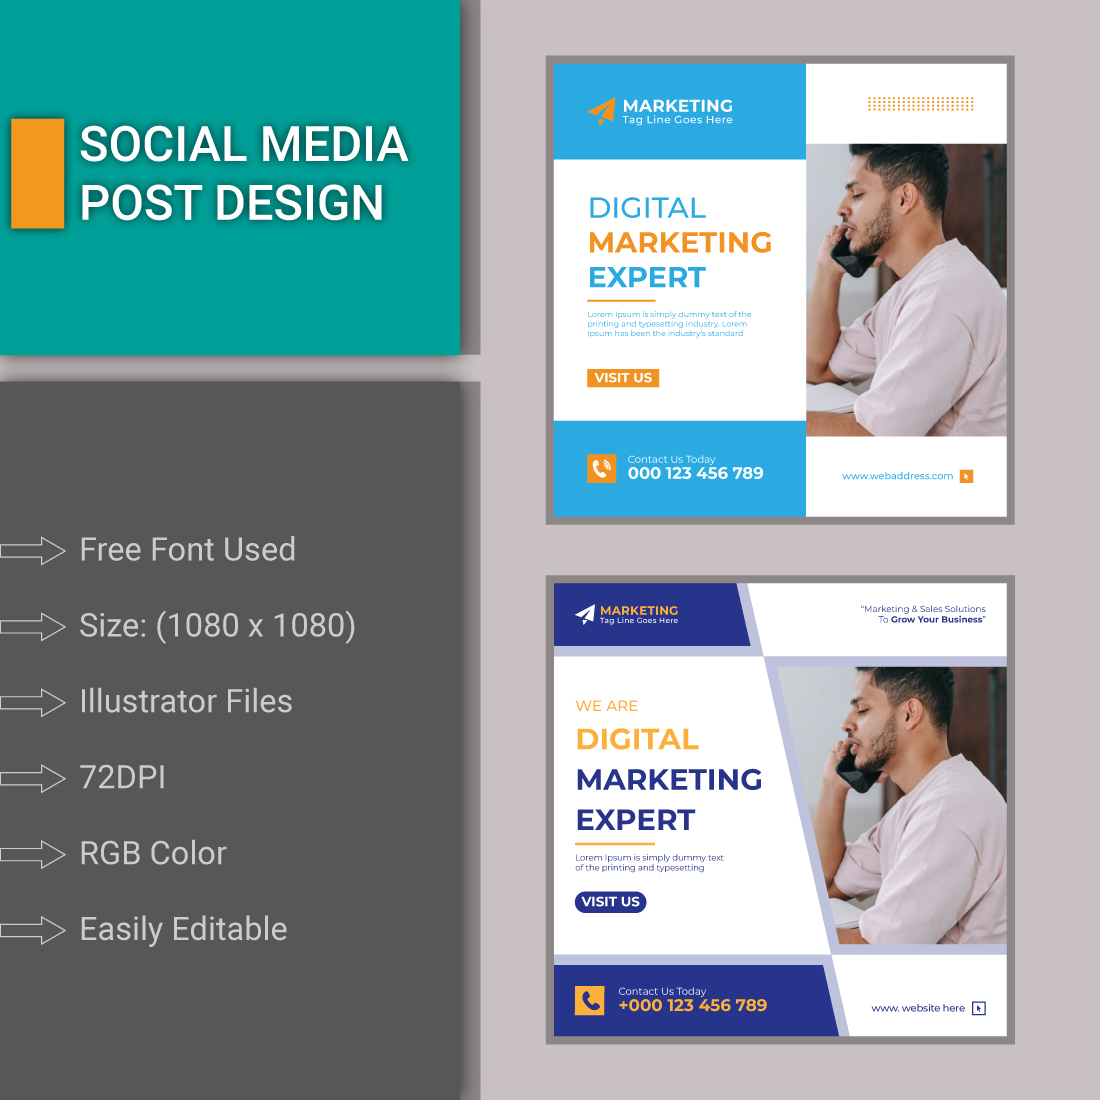 Social Media Posts Design preview image.